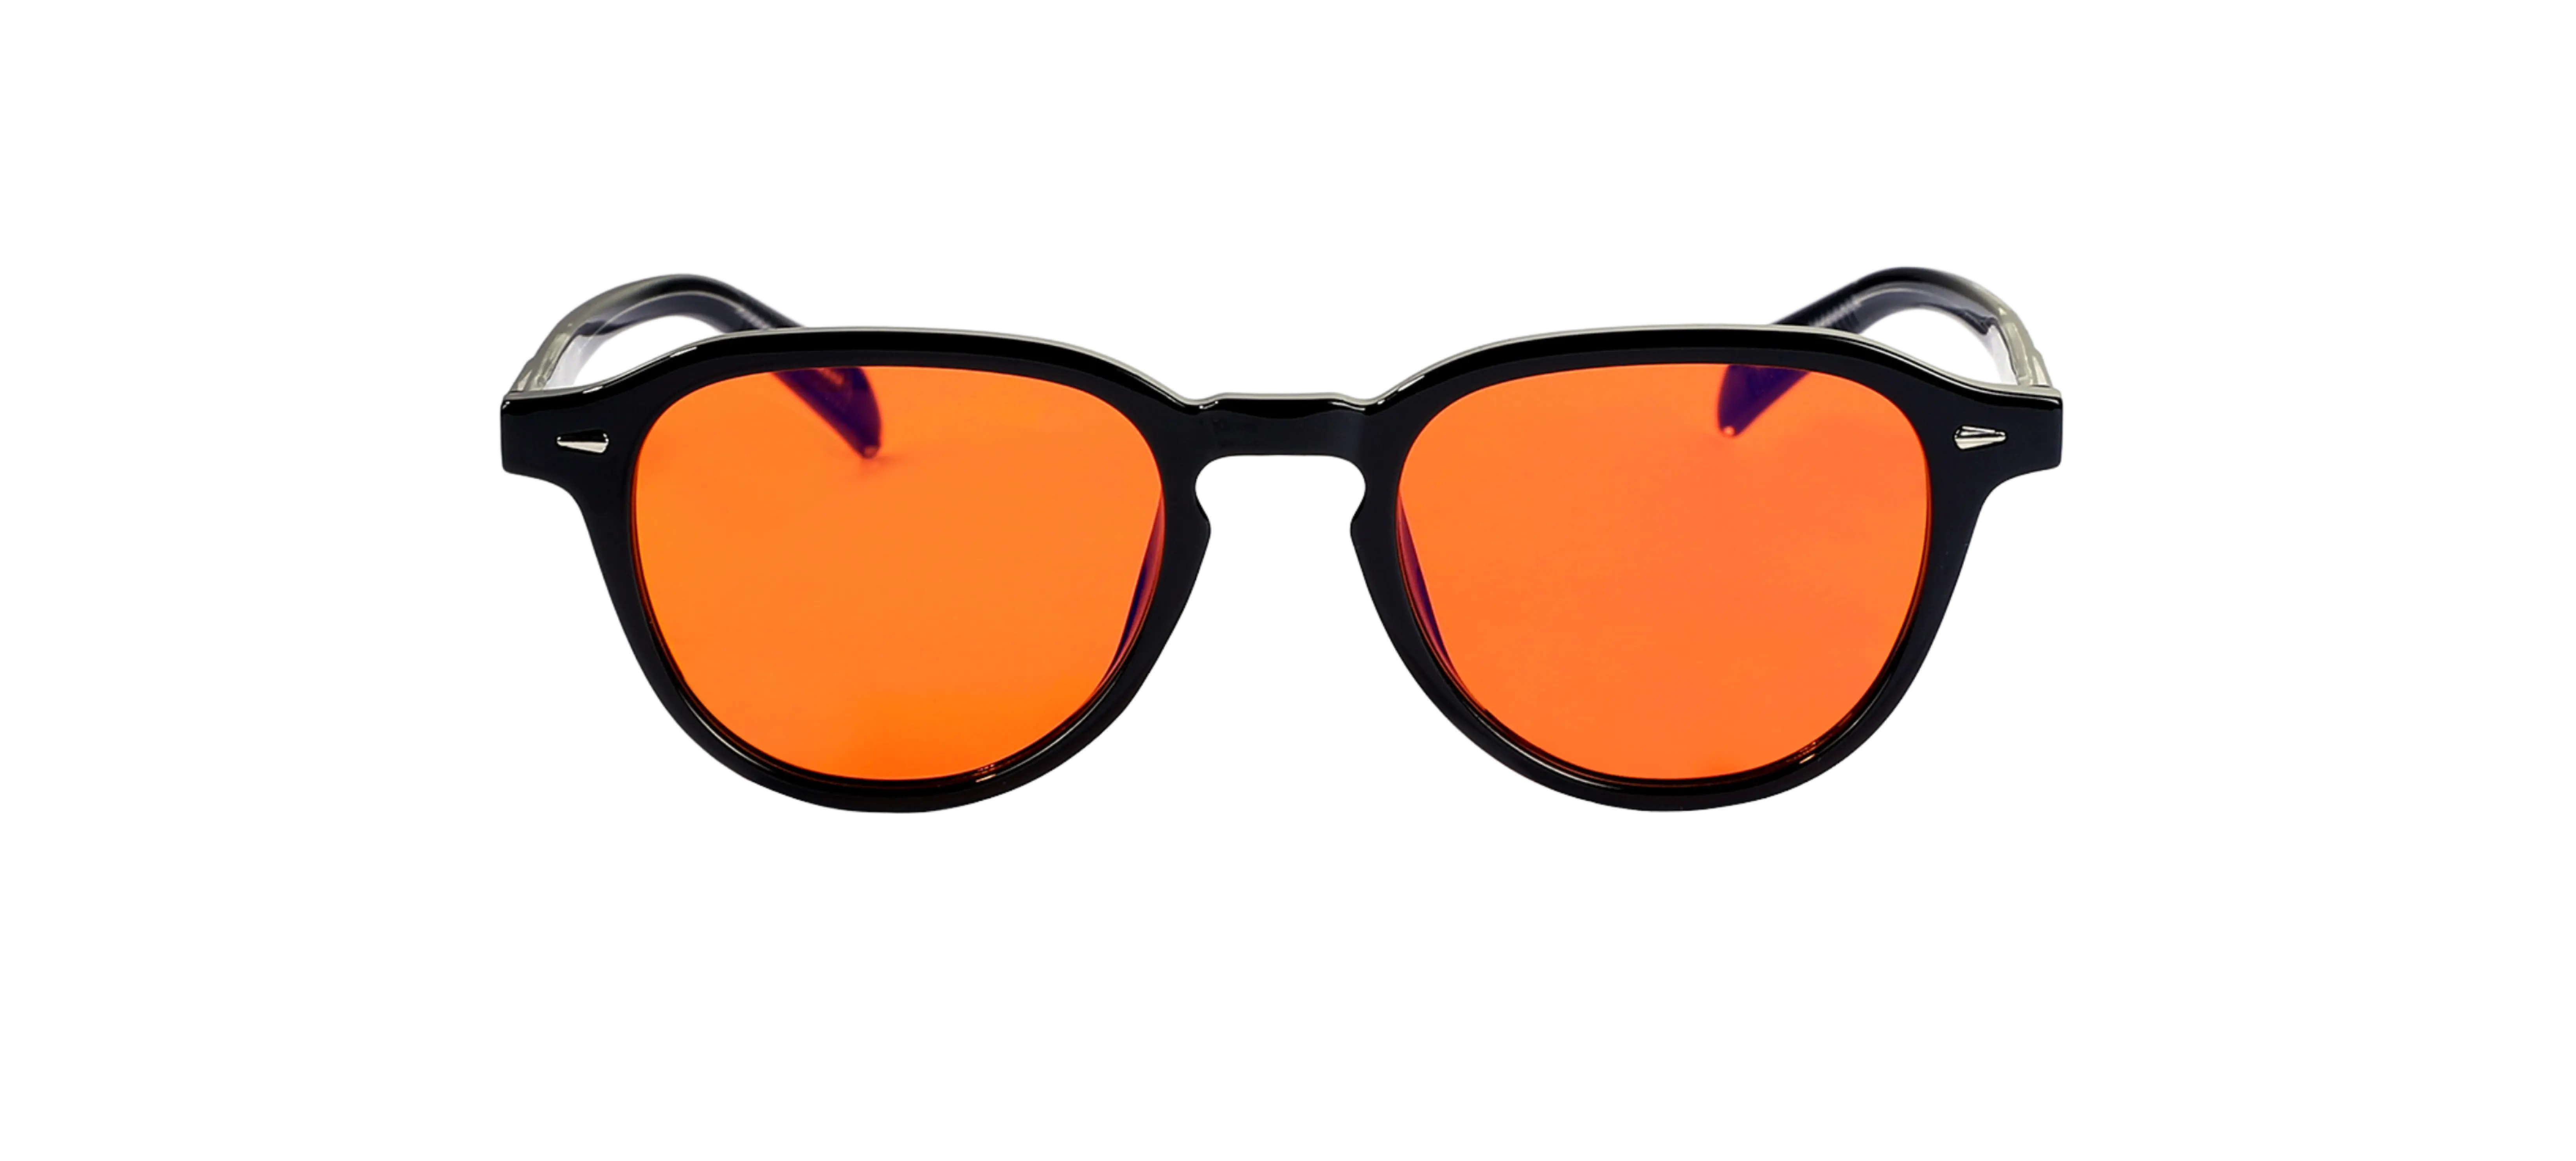 Stylish sunglasses with orange tinted lenses on a black background.